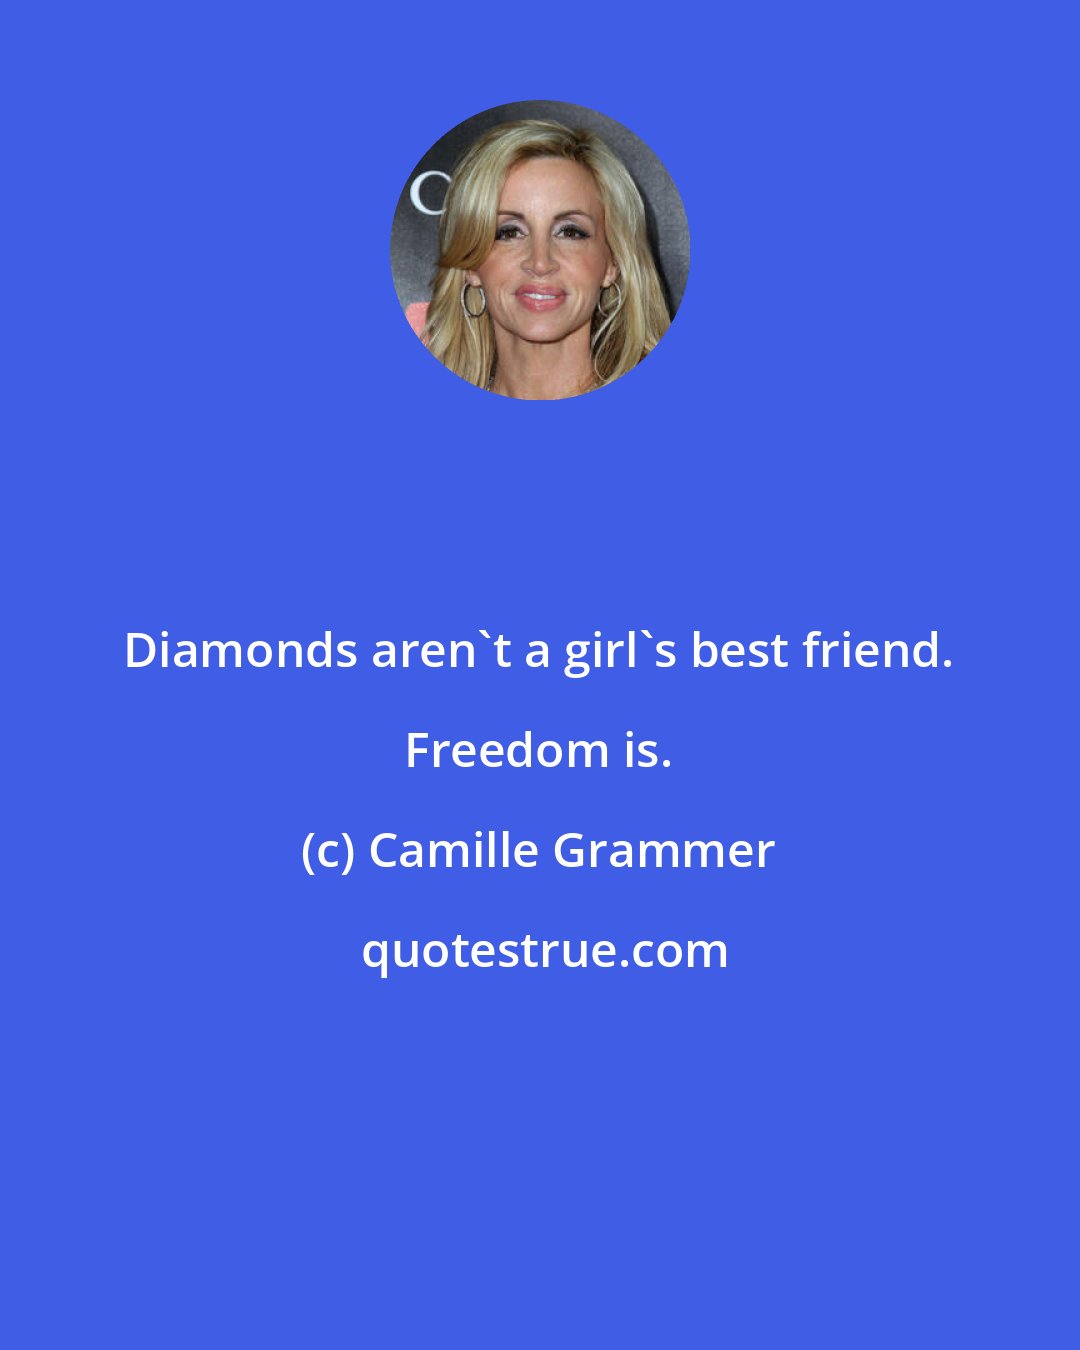 Camille Grammer: Diamonds aren't a girl's best friend. Freedom is.